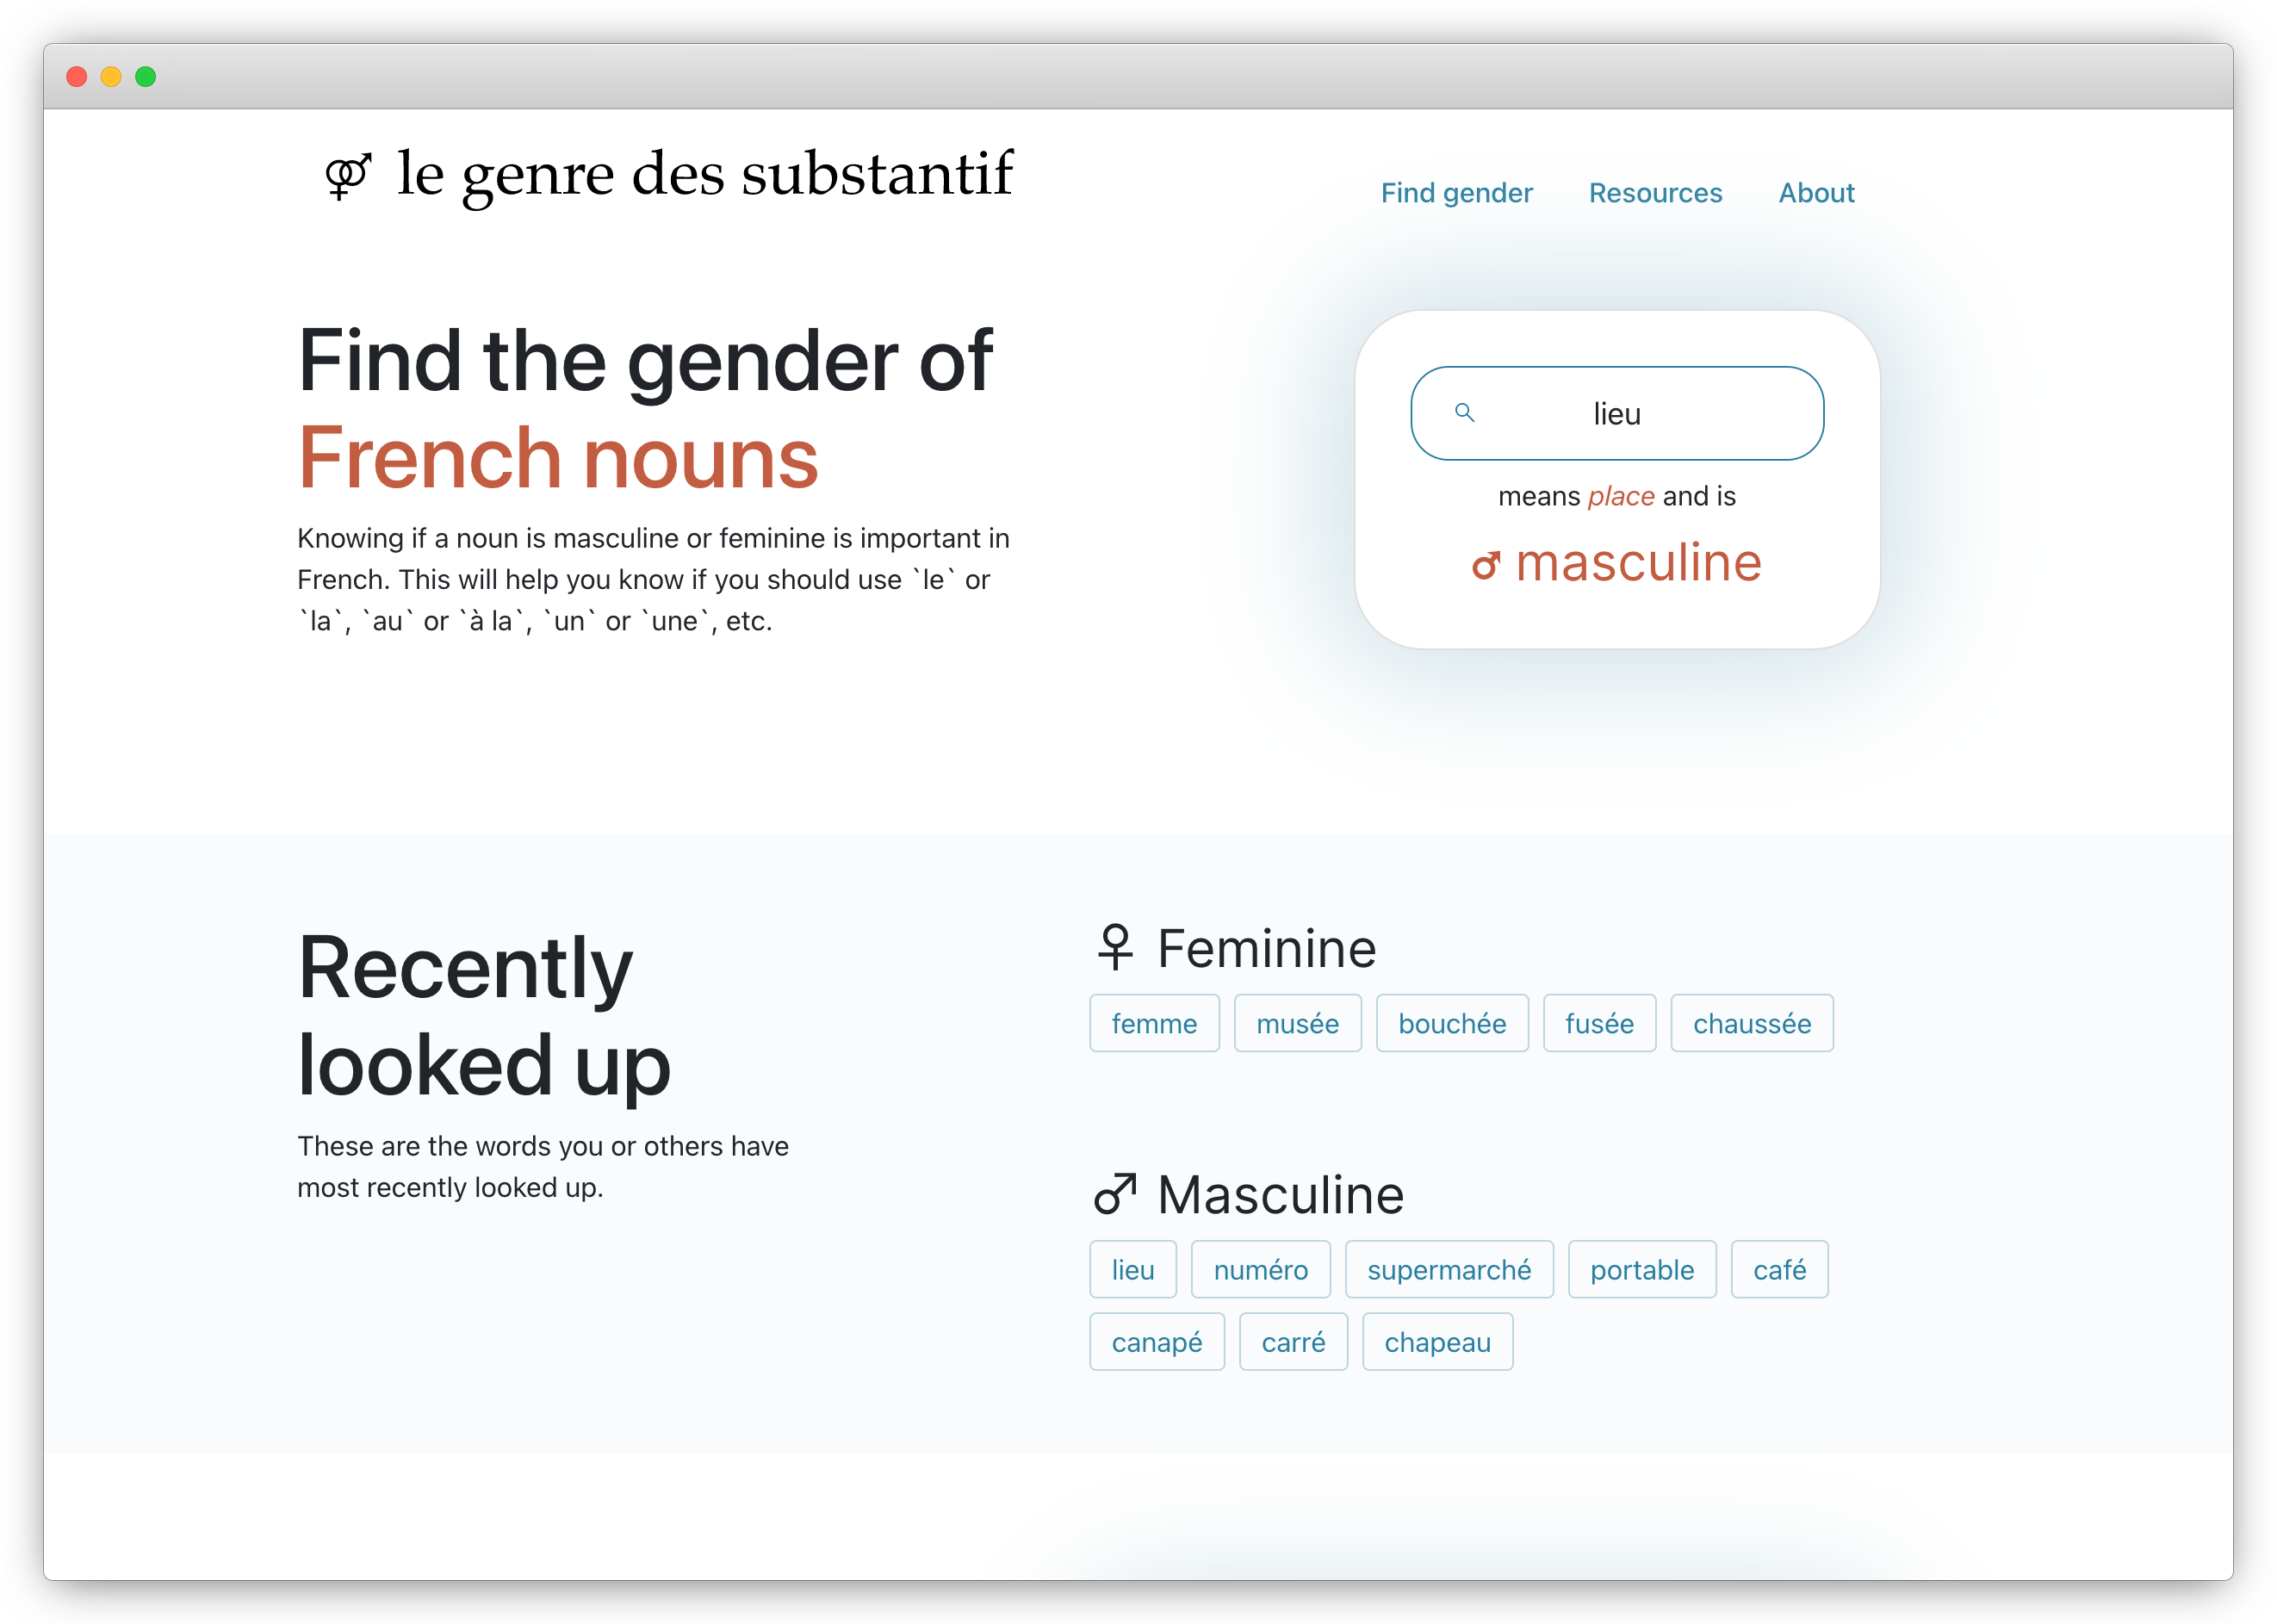 Screenshot of the genre substantif app